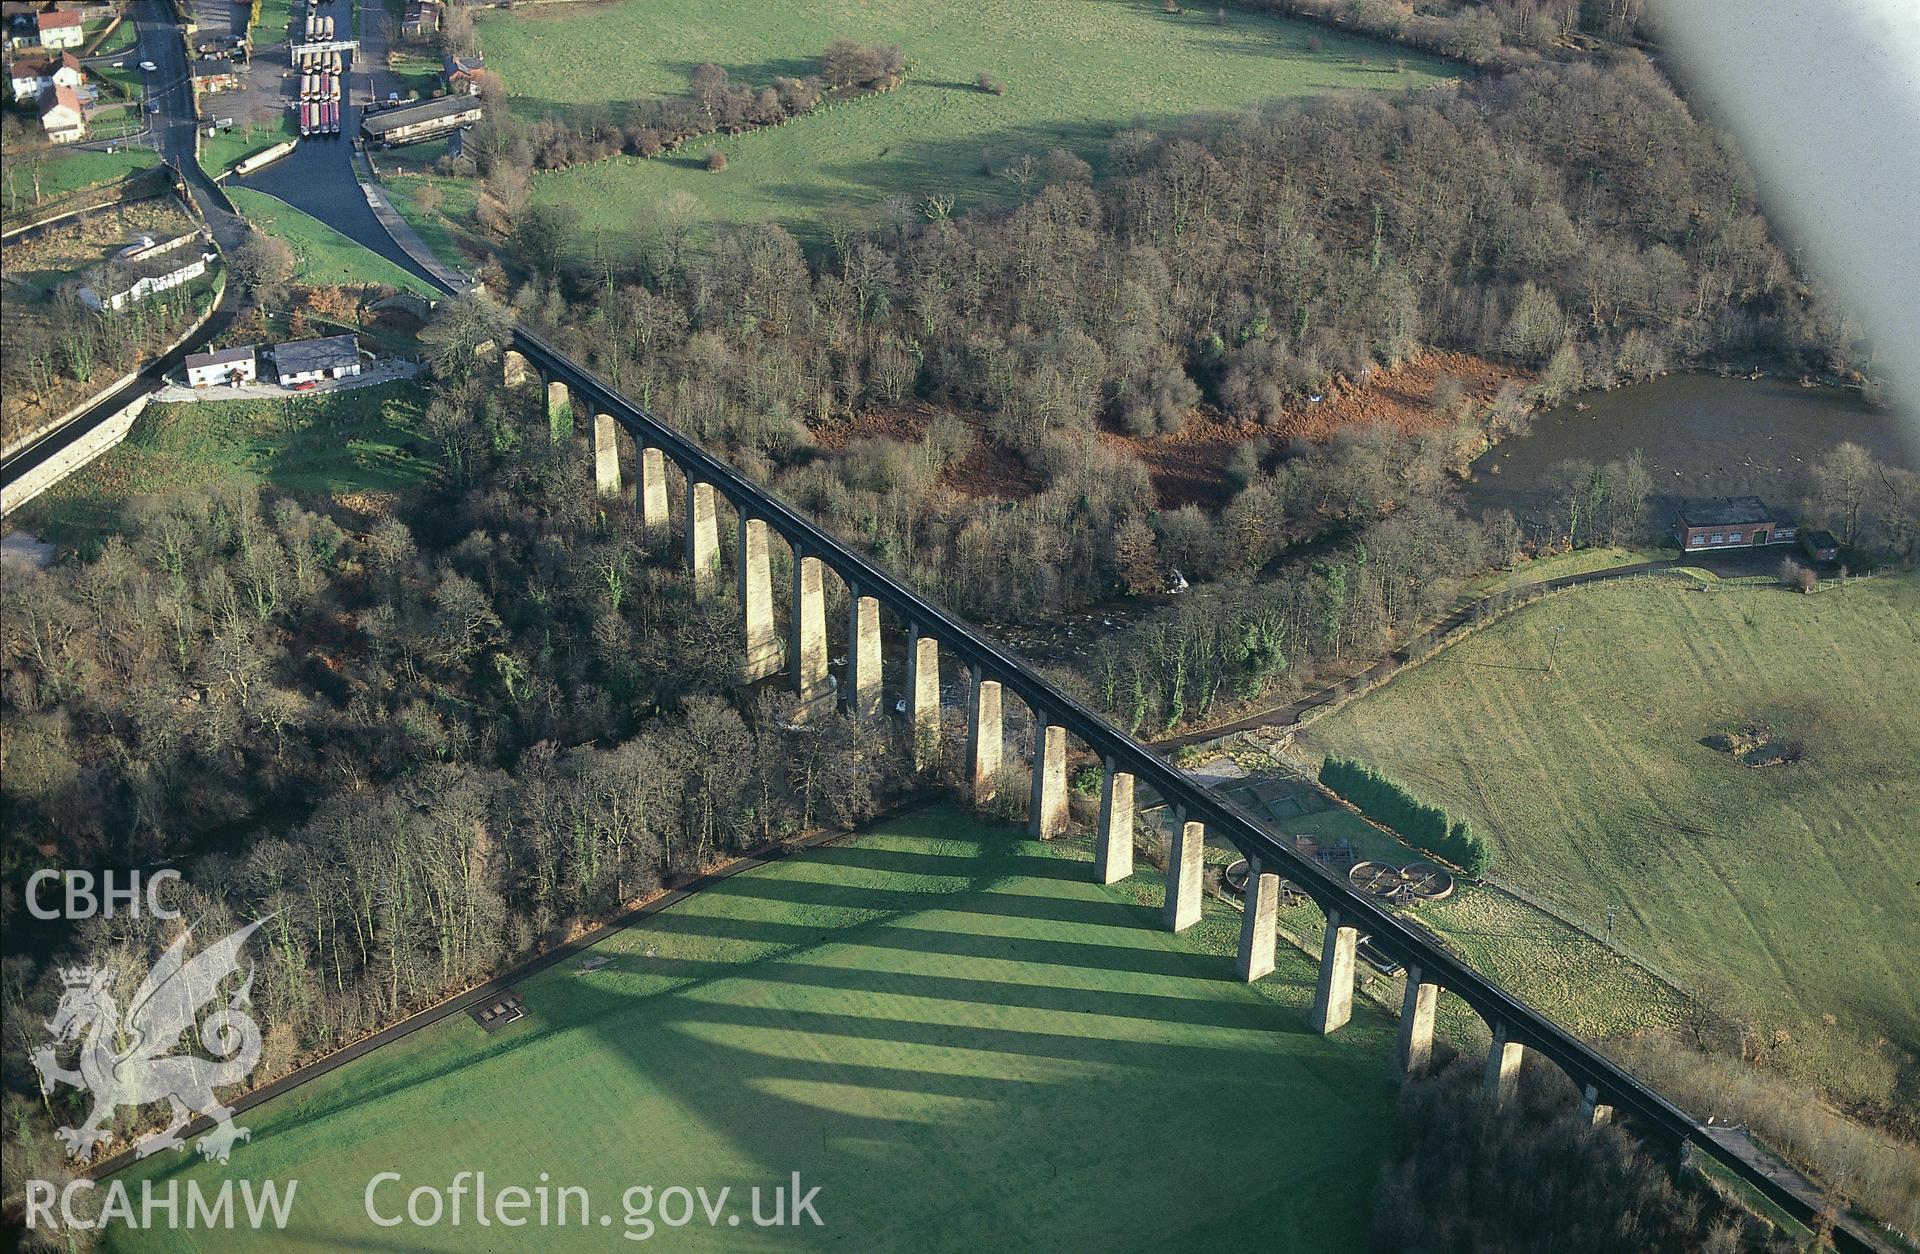 Slide of RCAHMW colour oblique aerial photograph of Pontcysyllte Aqueduct., taken by C.R. Musson, 1994.